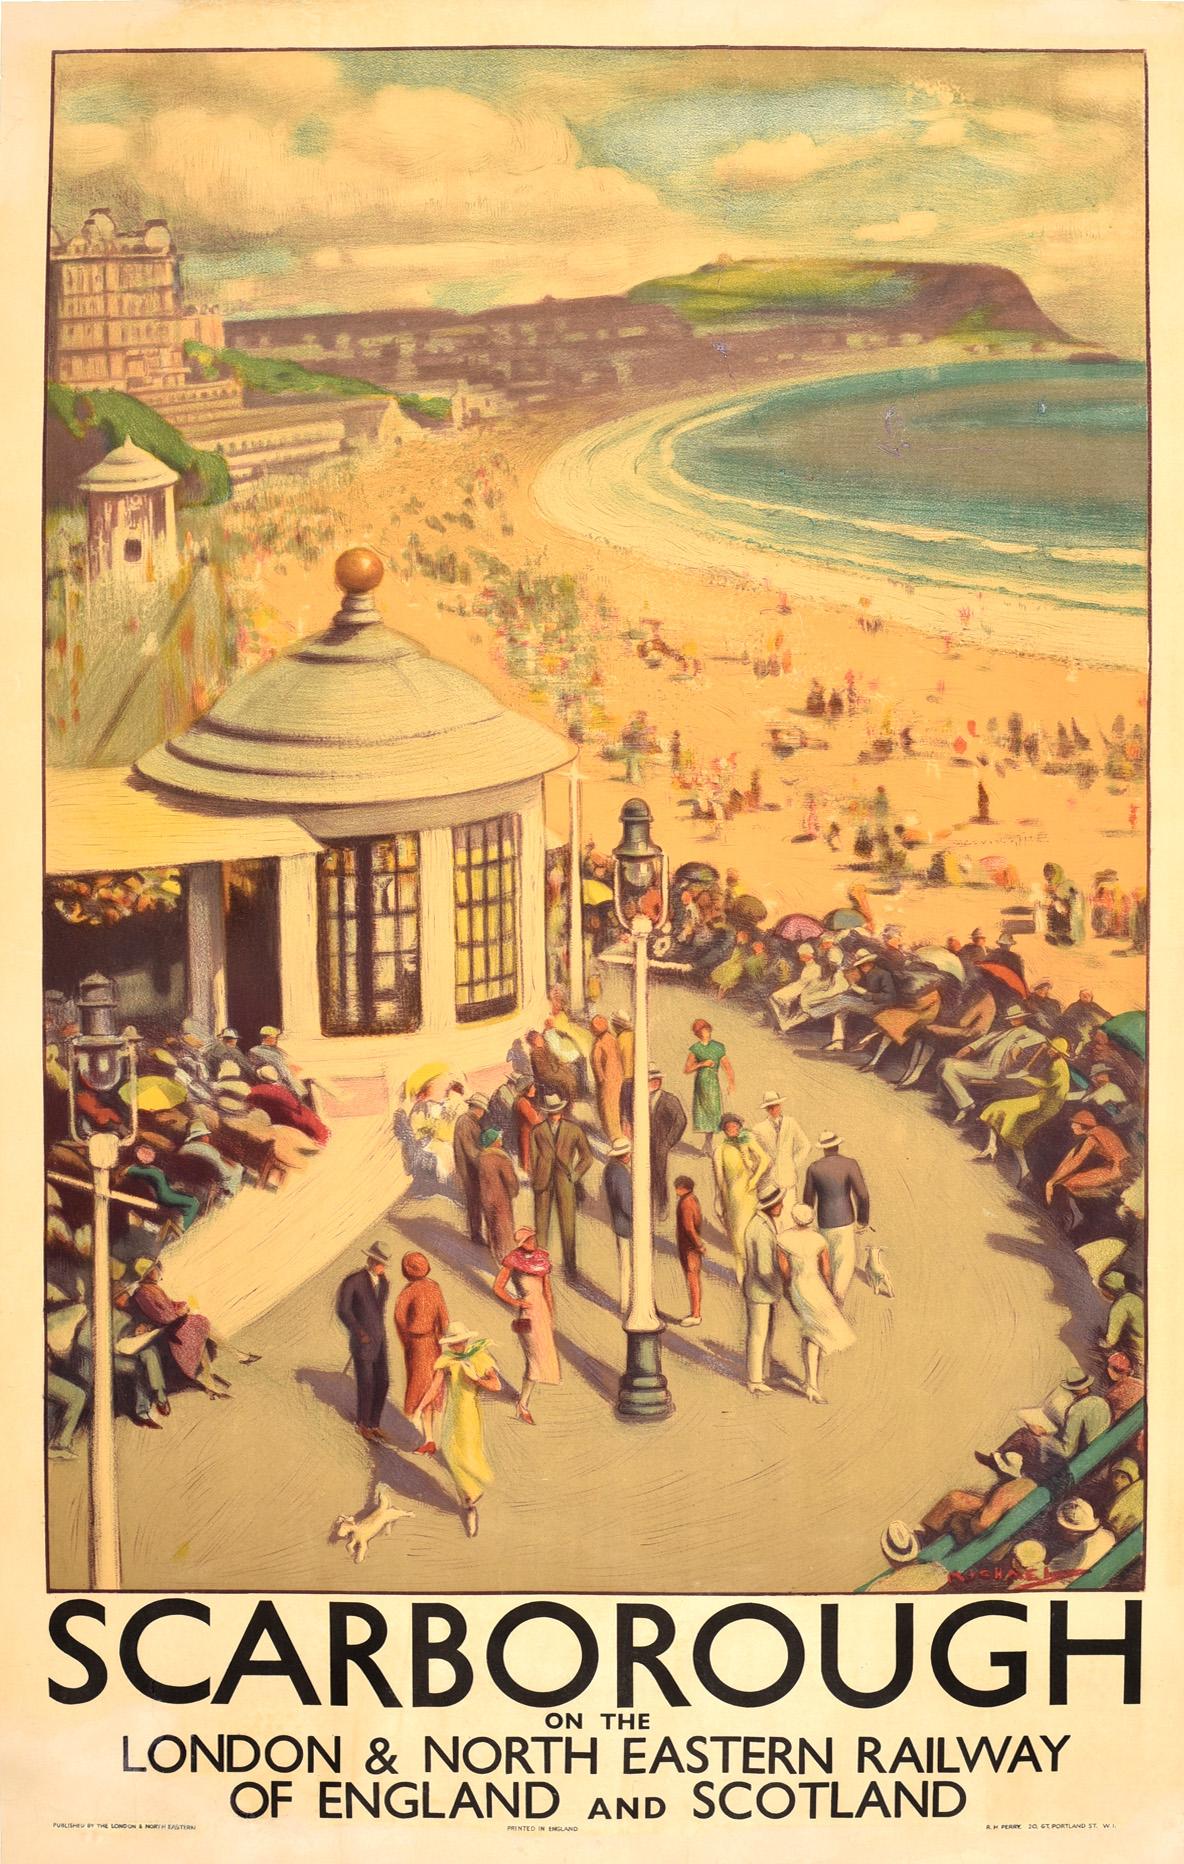 Arthur C. Michael Print - Original Vintage Travel Poster Scarborough London & North Eastern Railway LNER